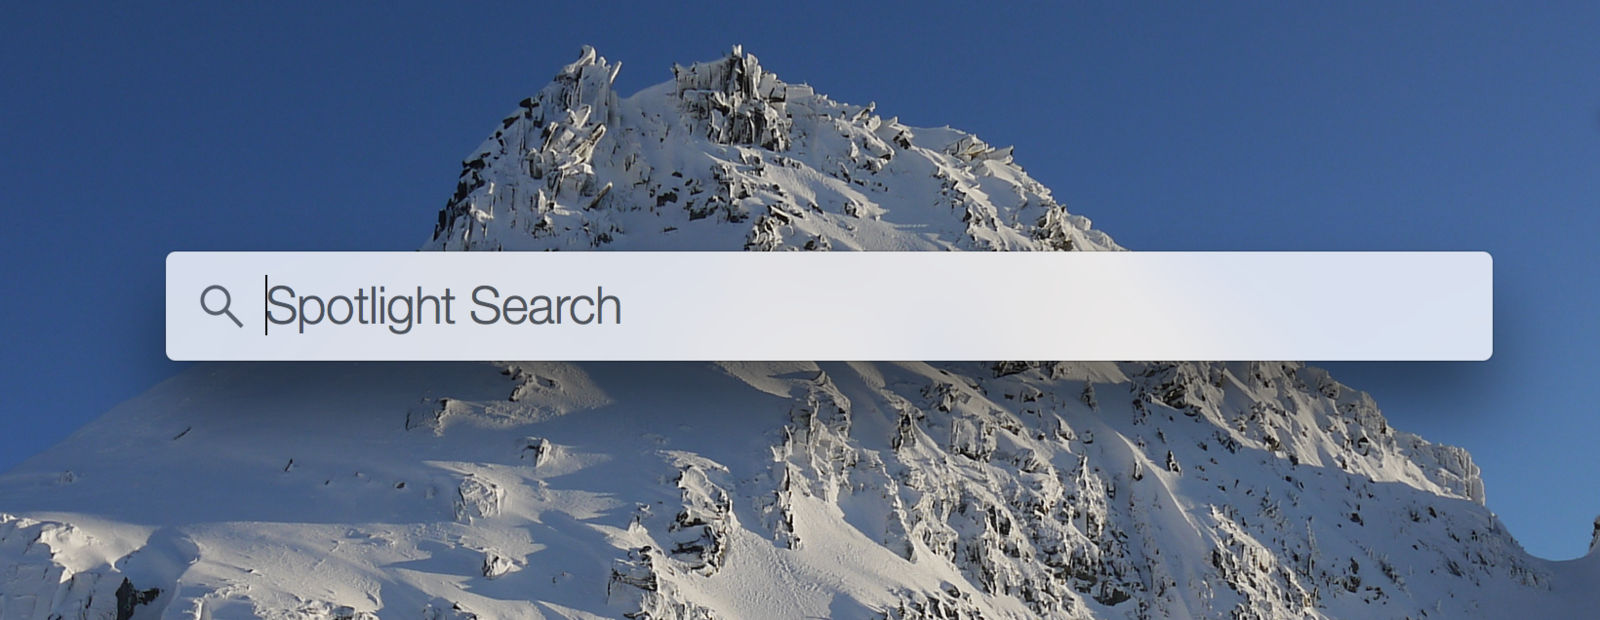 screenshot of mac spotlight search